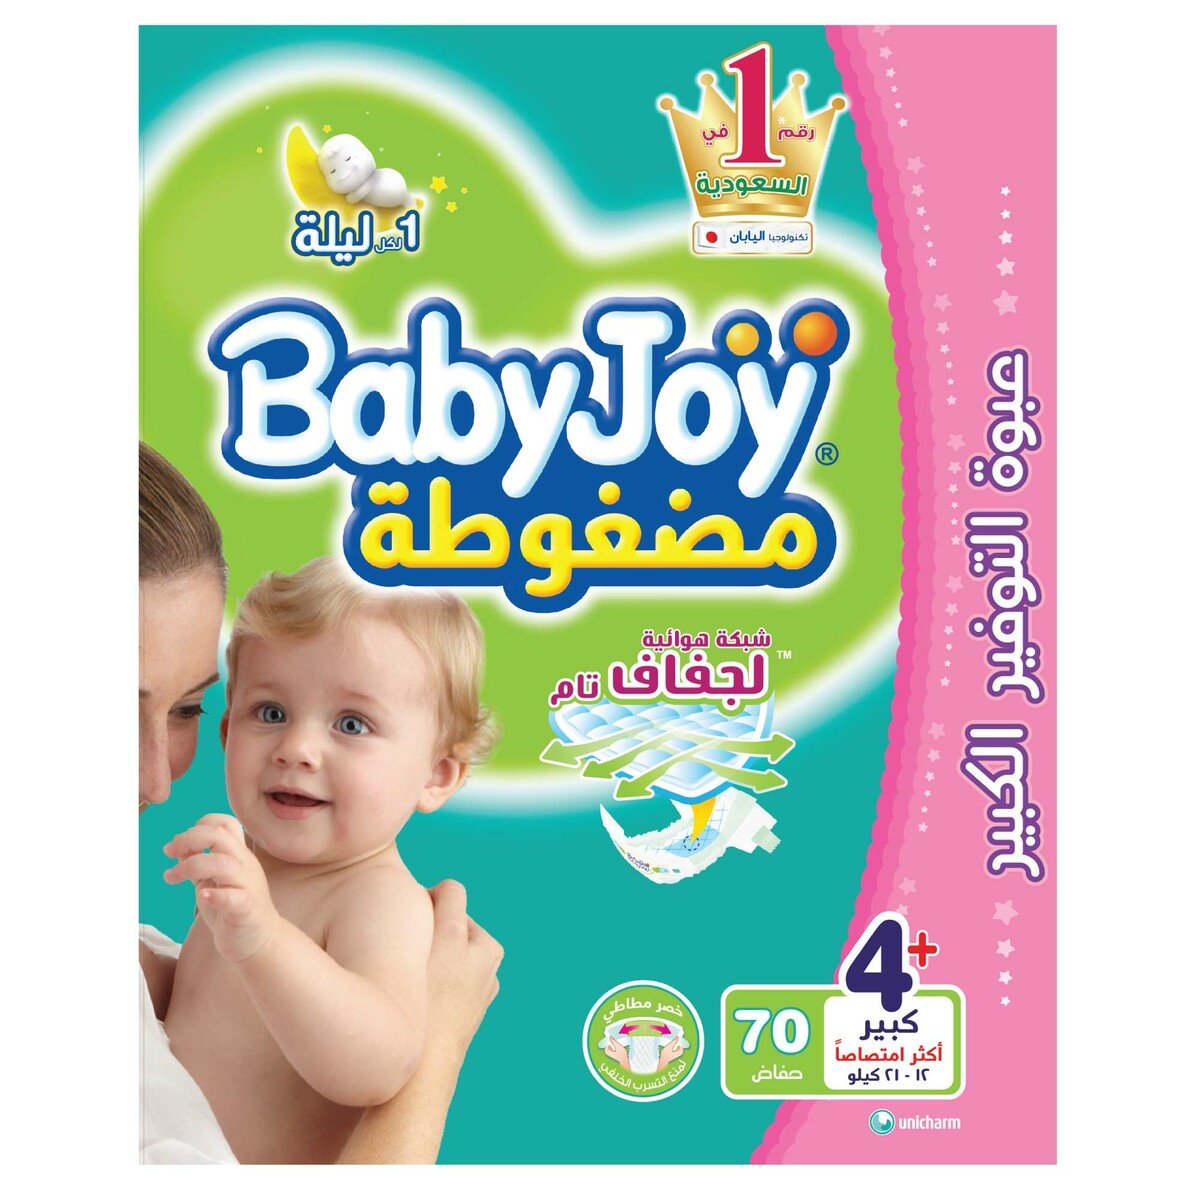 Baby Joy Diaper Giant Pack Size 4+ Large Plus 70pcs